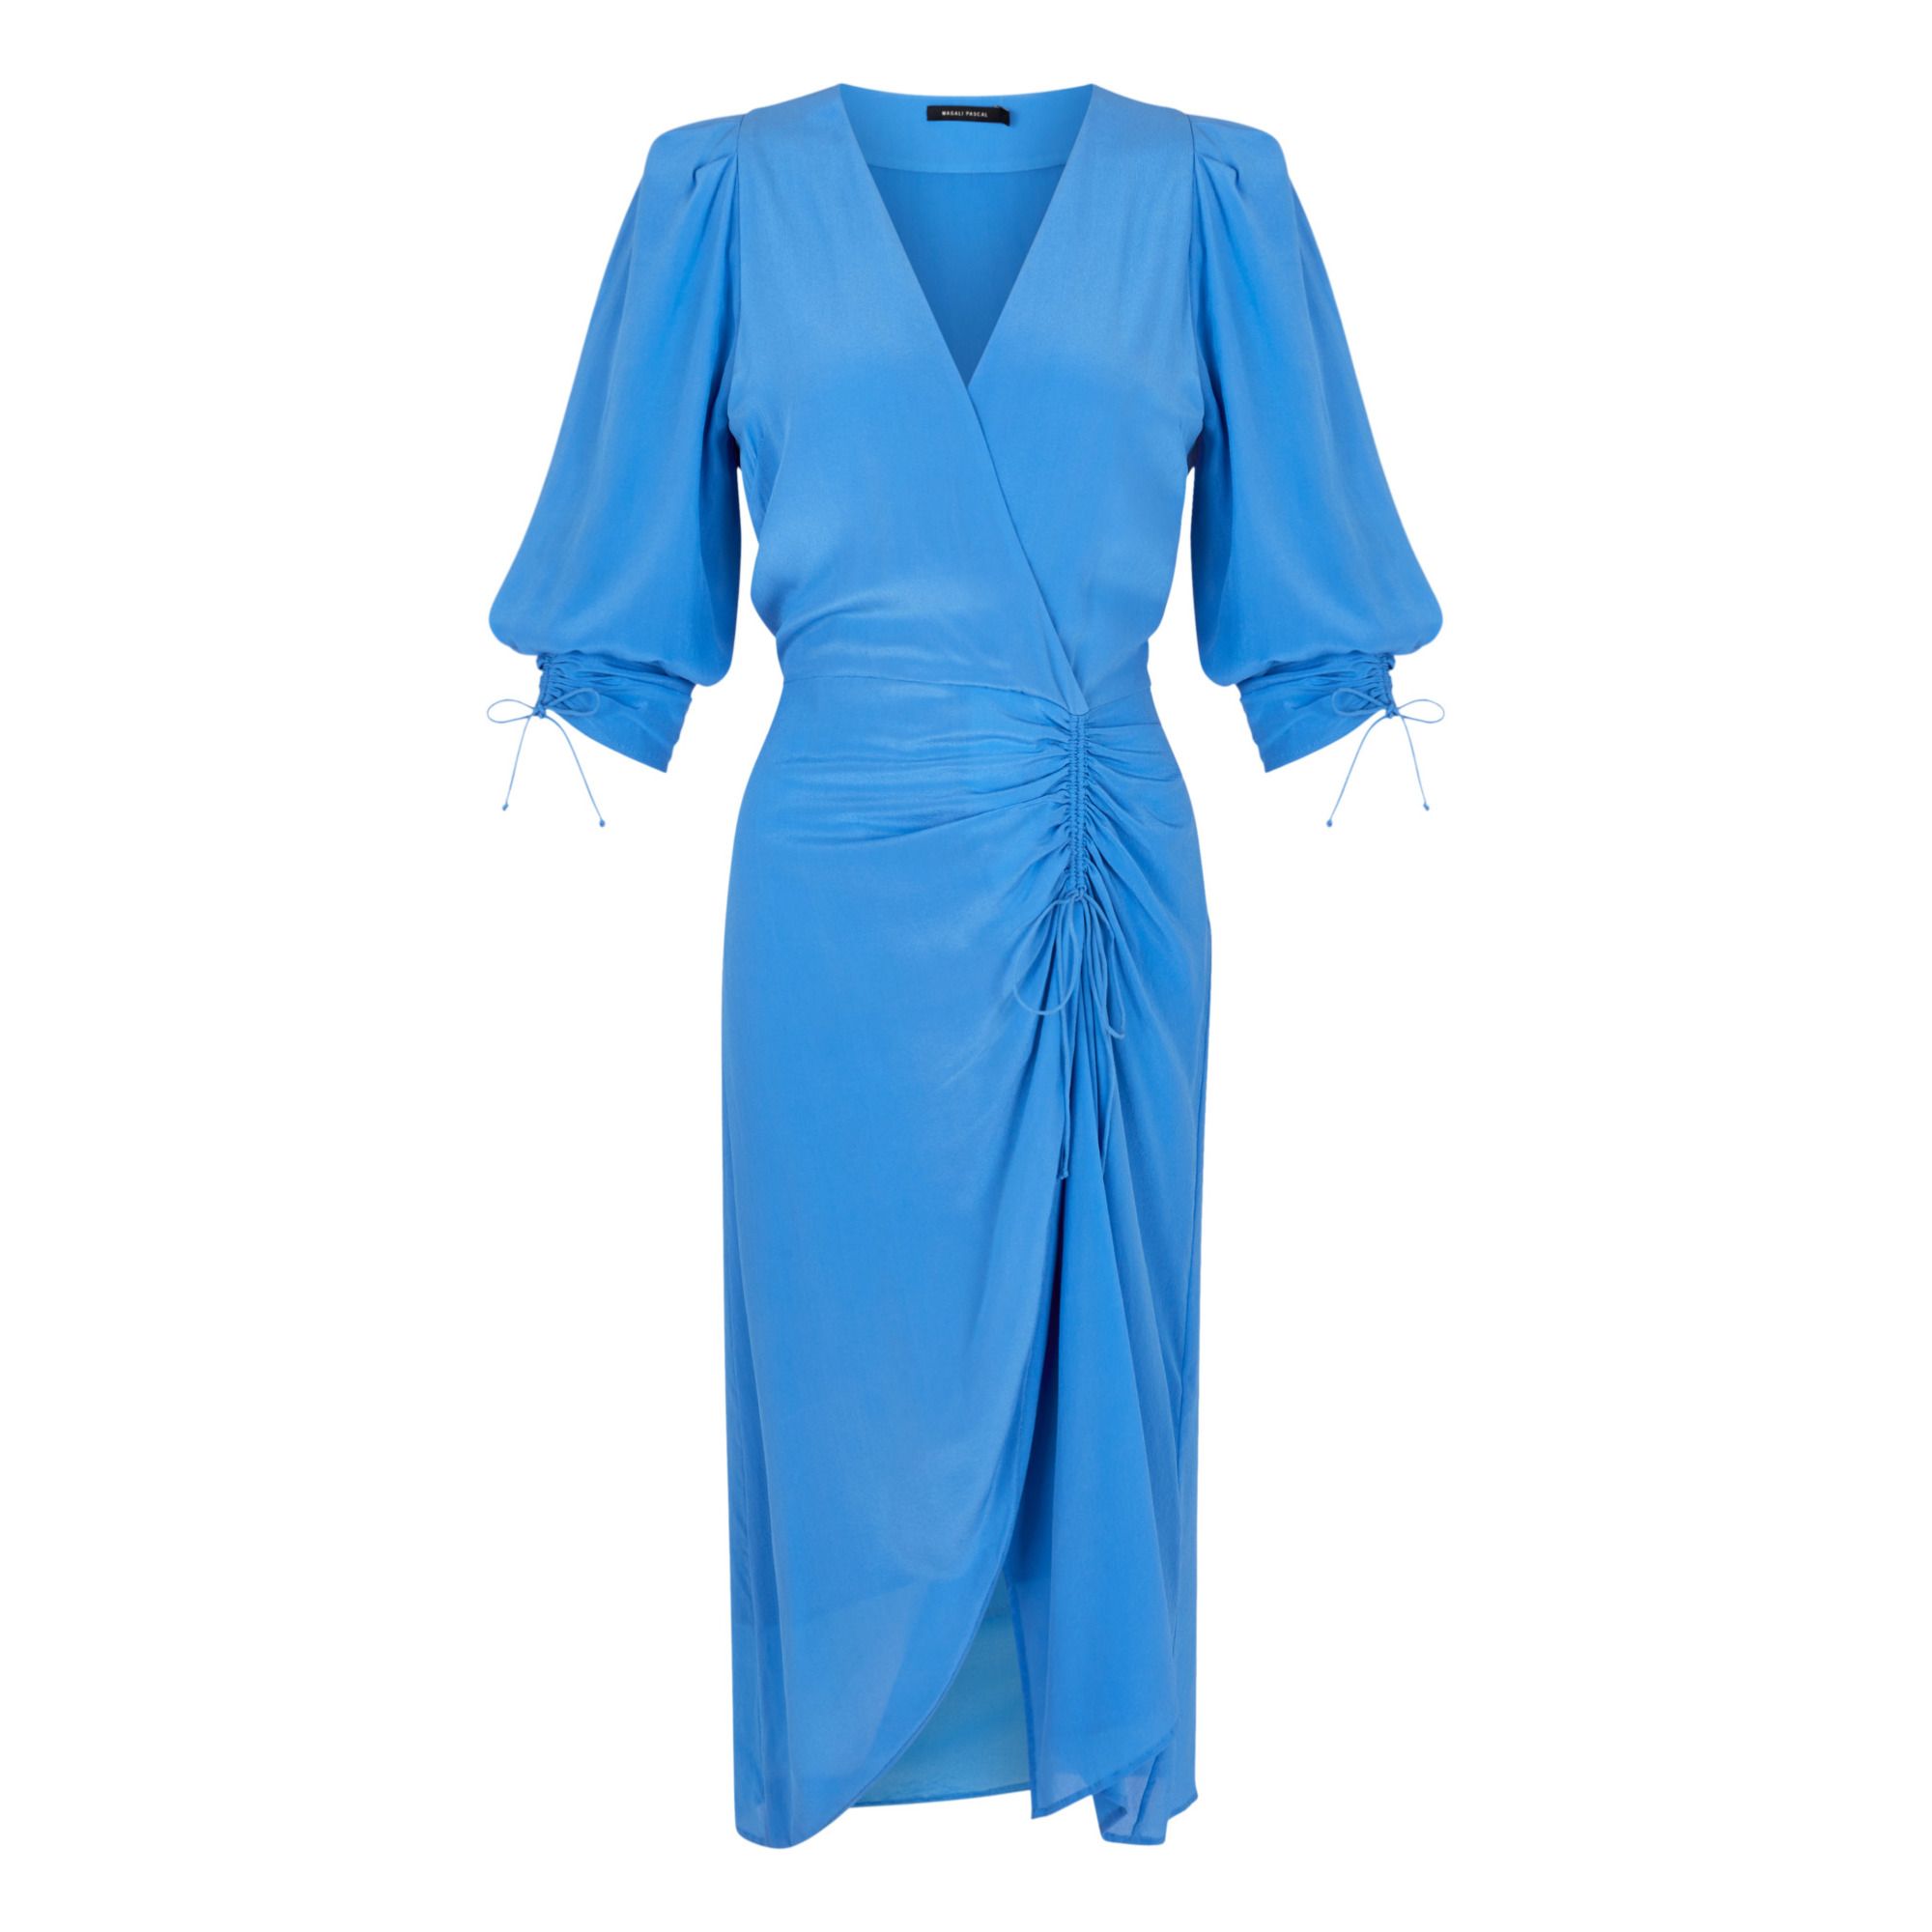 Magali Pascal - Milena dress - Electric blue | Smallable